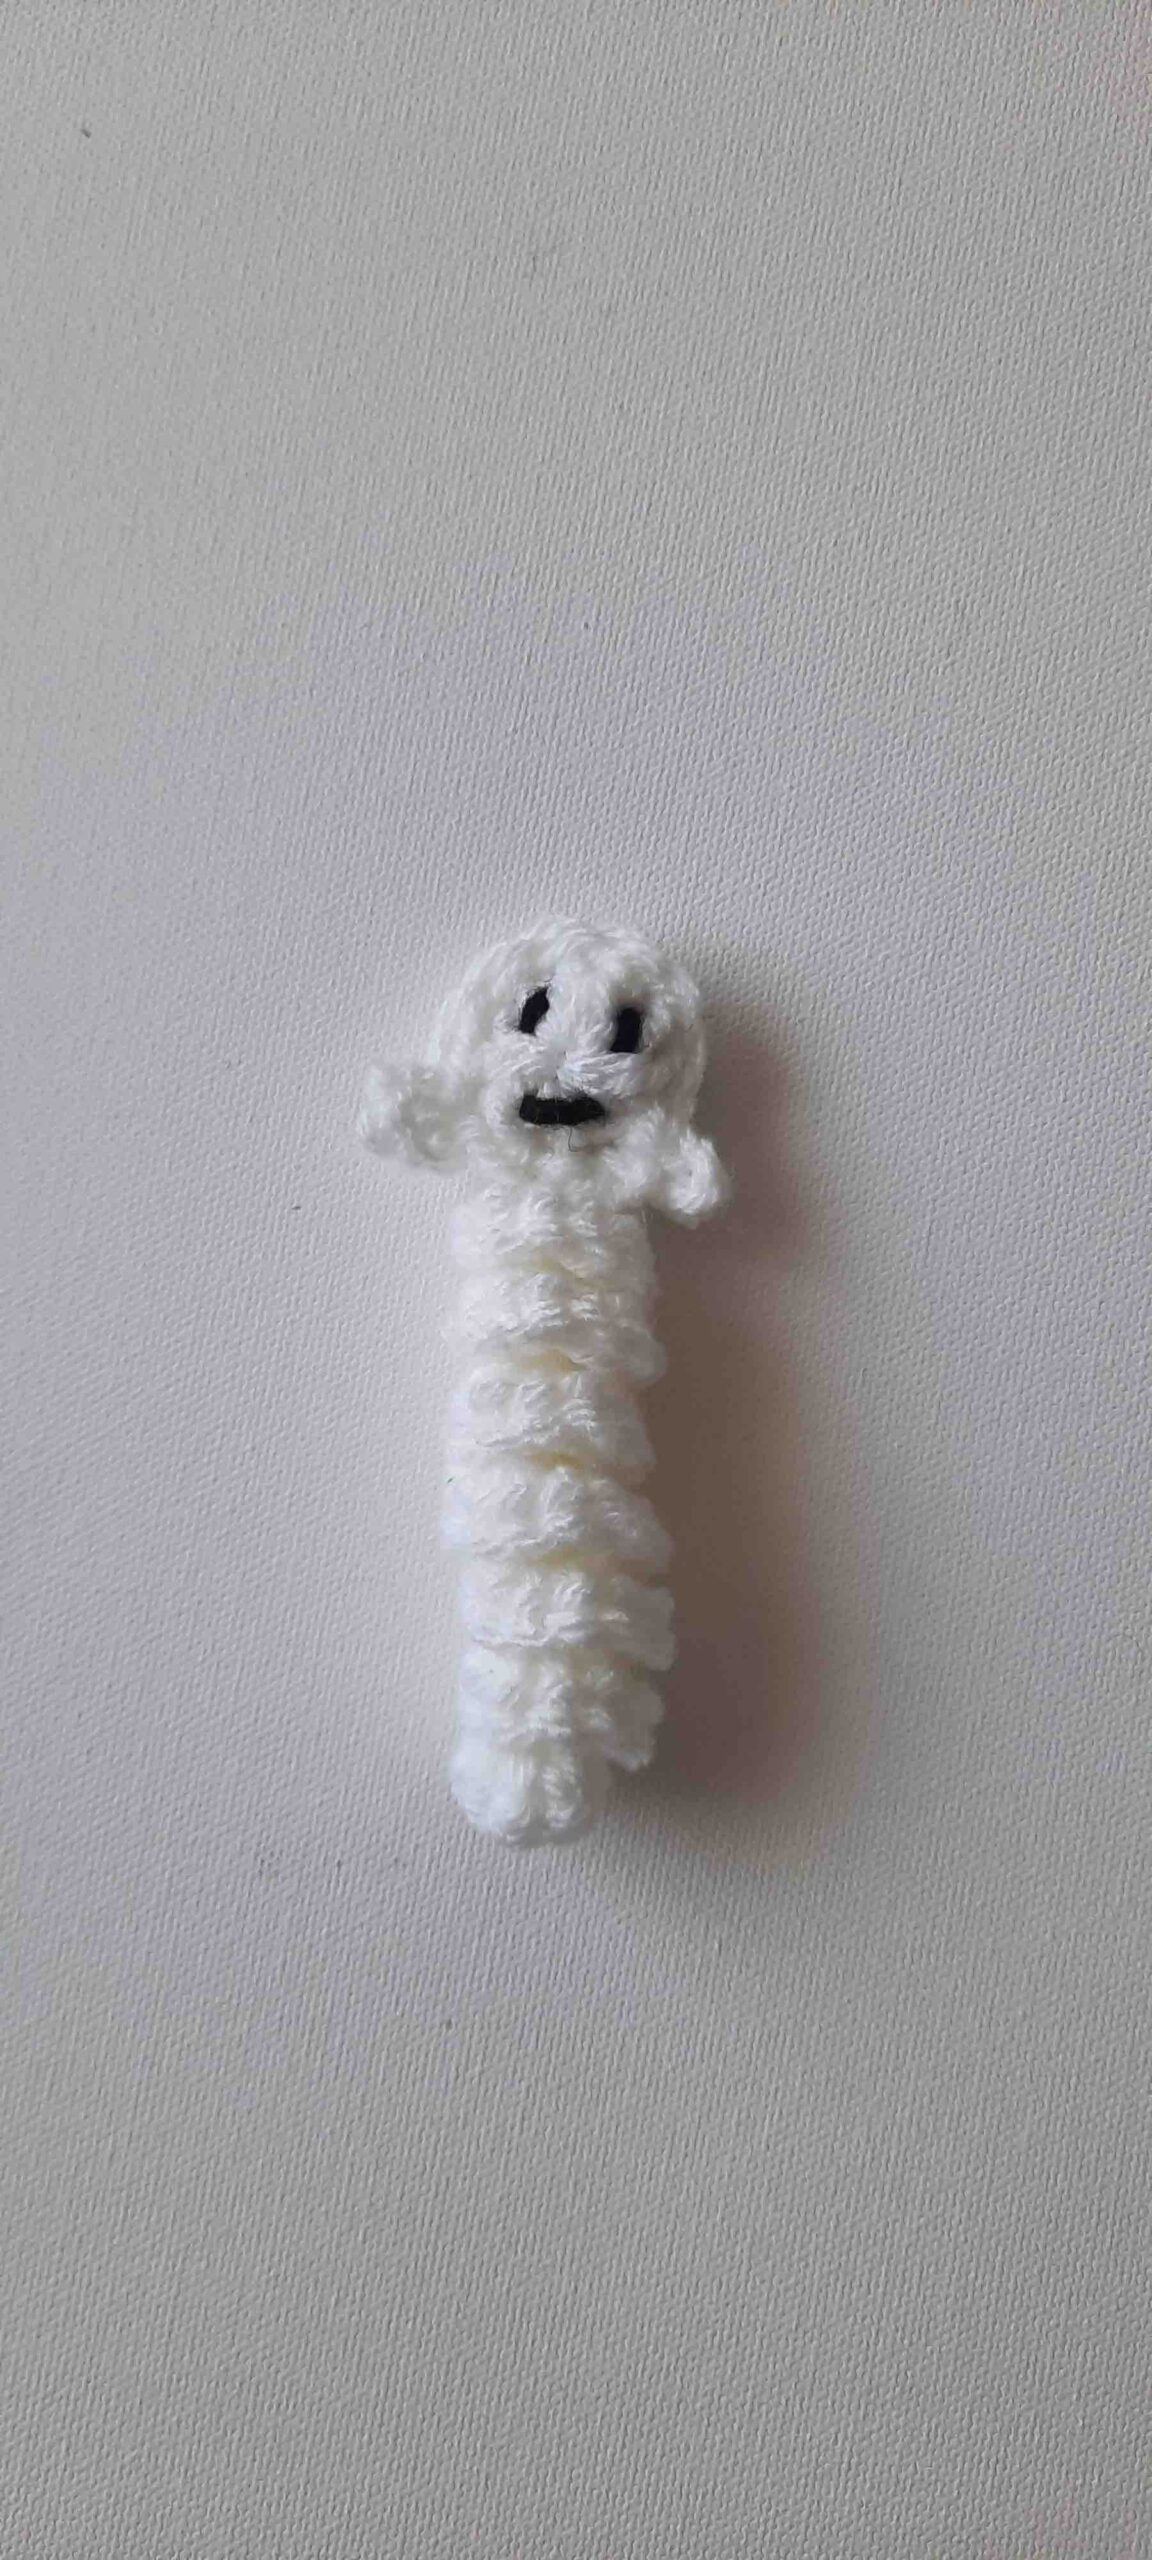 ghost crochet ornament